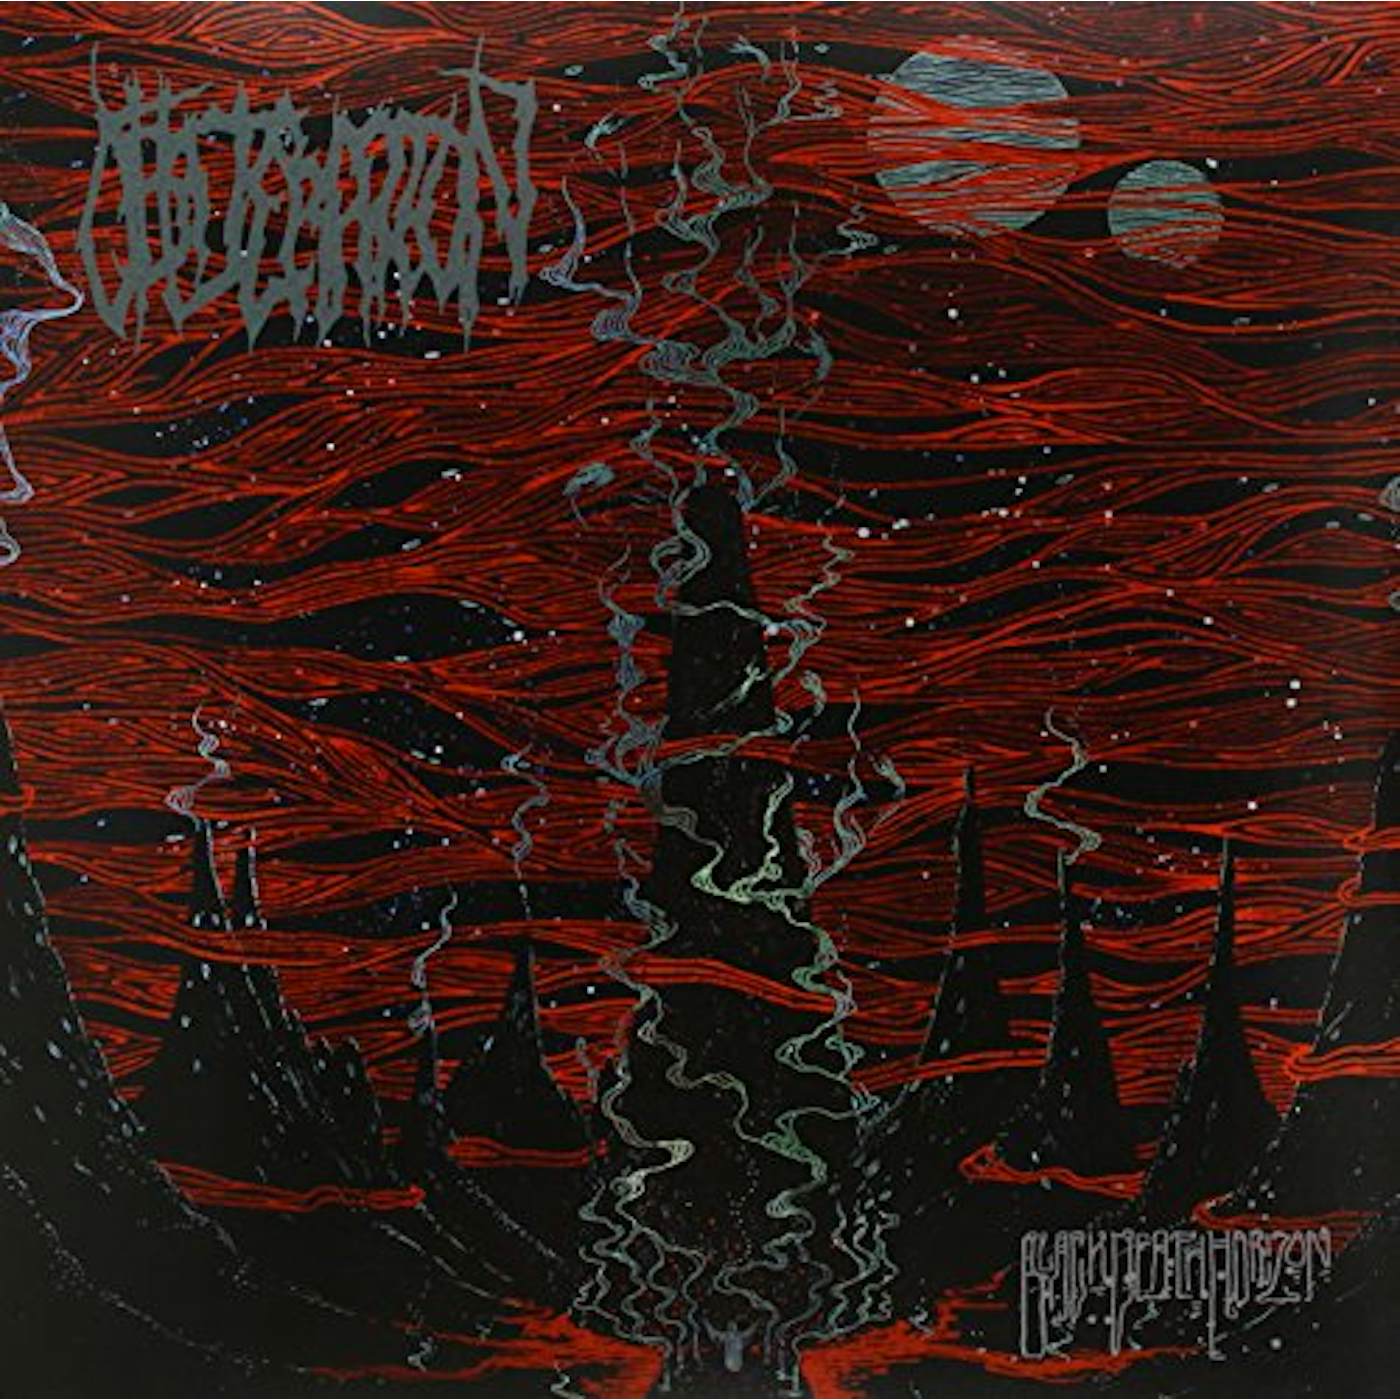 Obliteration BLACK DEATH HORIZON (CLEAR VINYL) Vinyl Record - Colored Vinyl